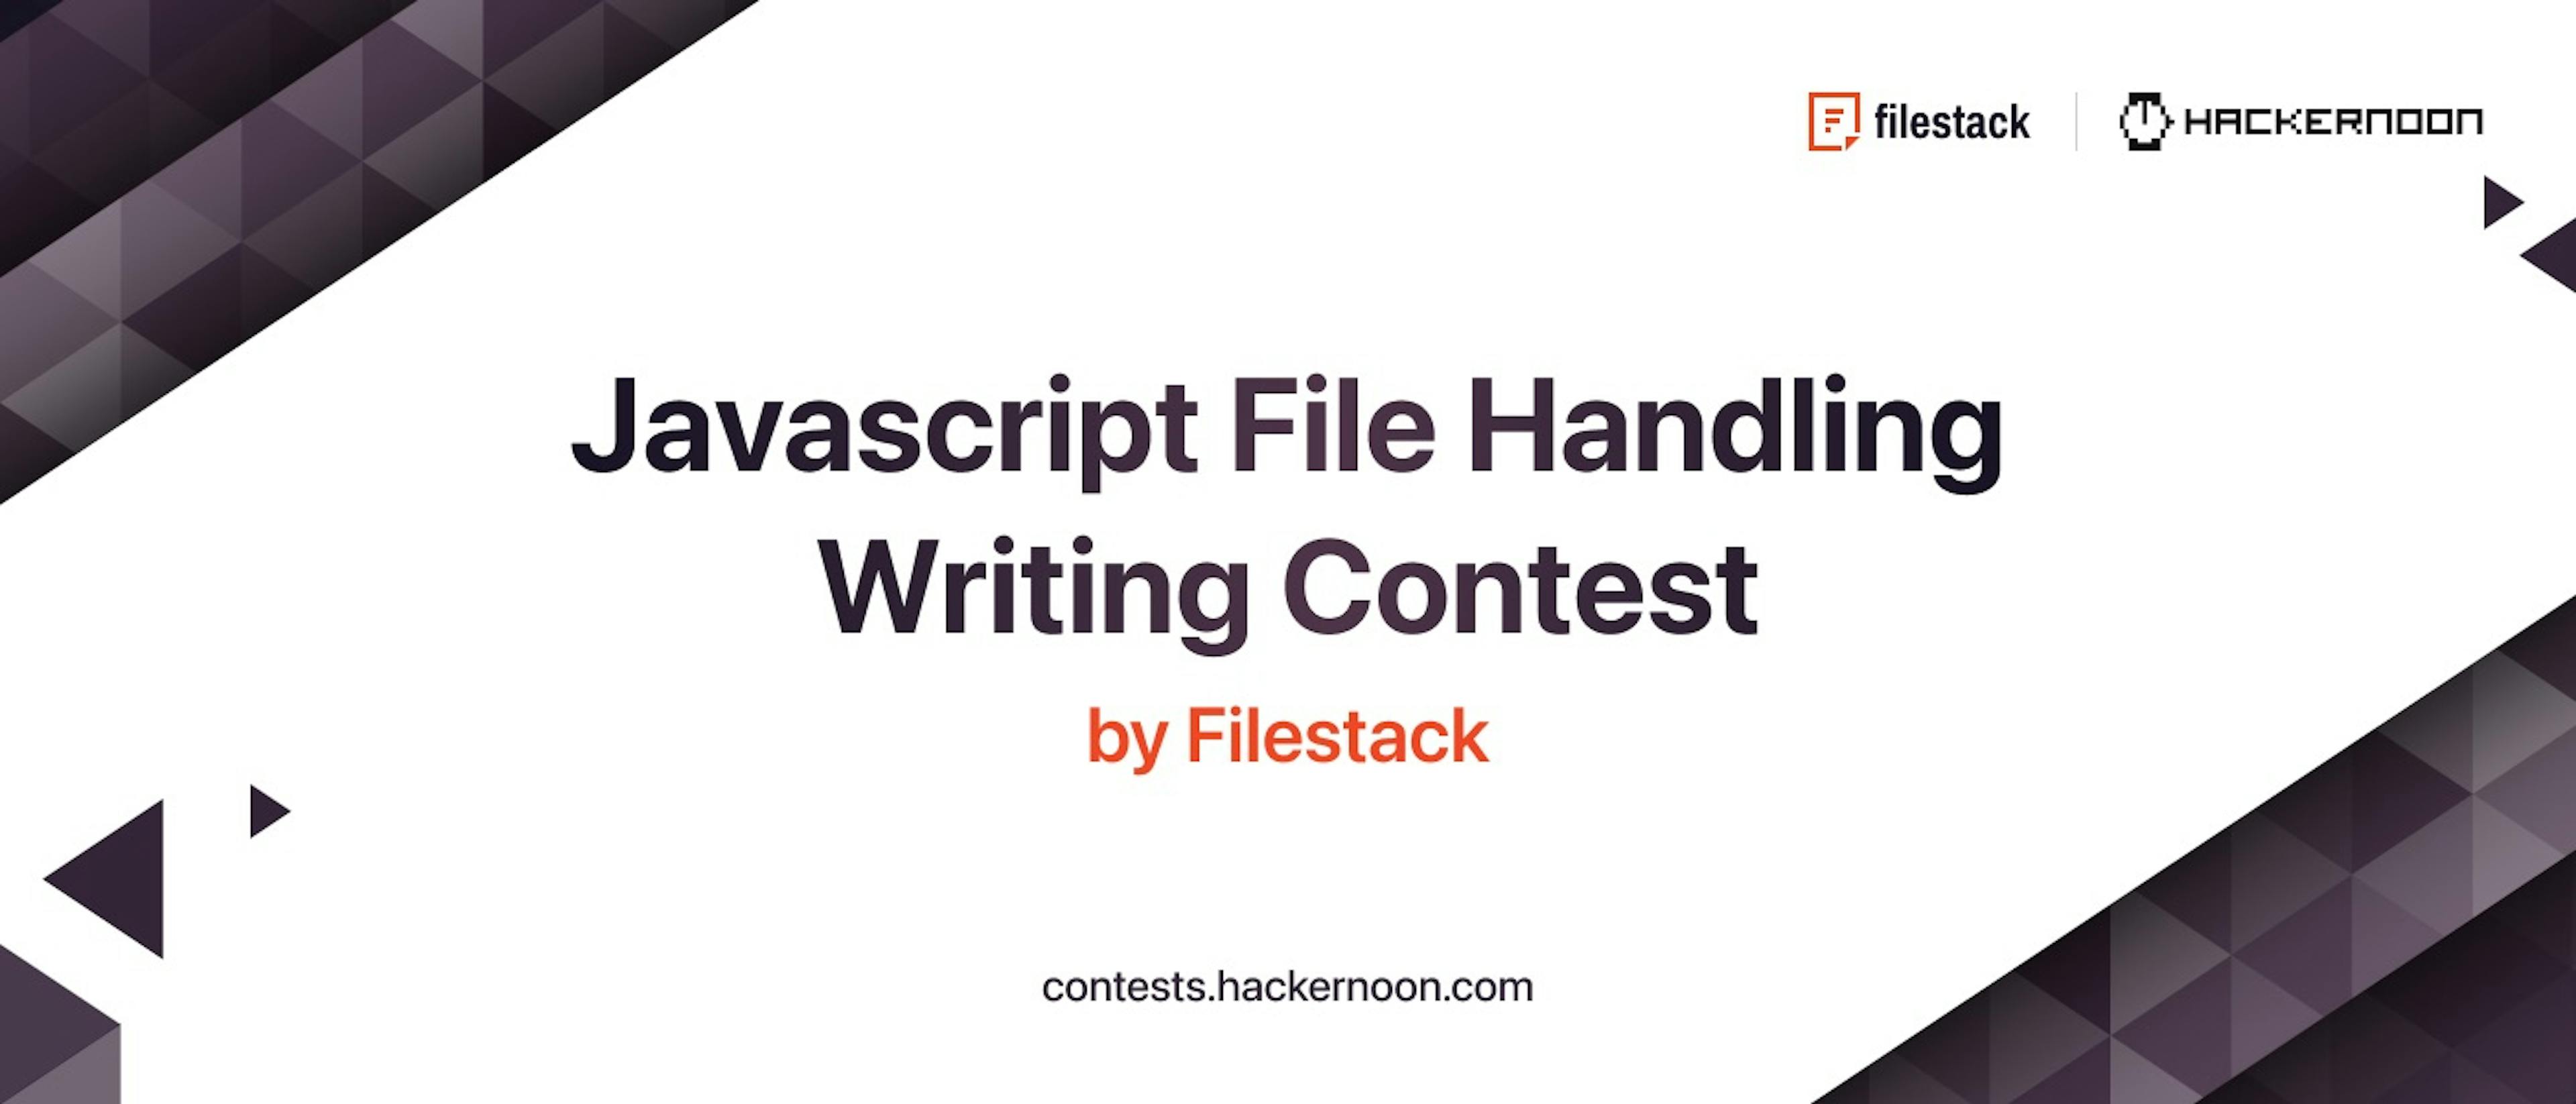 featured image - Filestack と HackerNoon による Javascript ファイル処理ライティング コンテスト